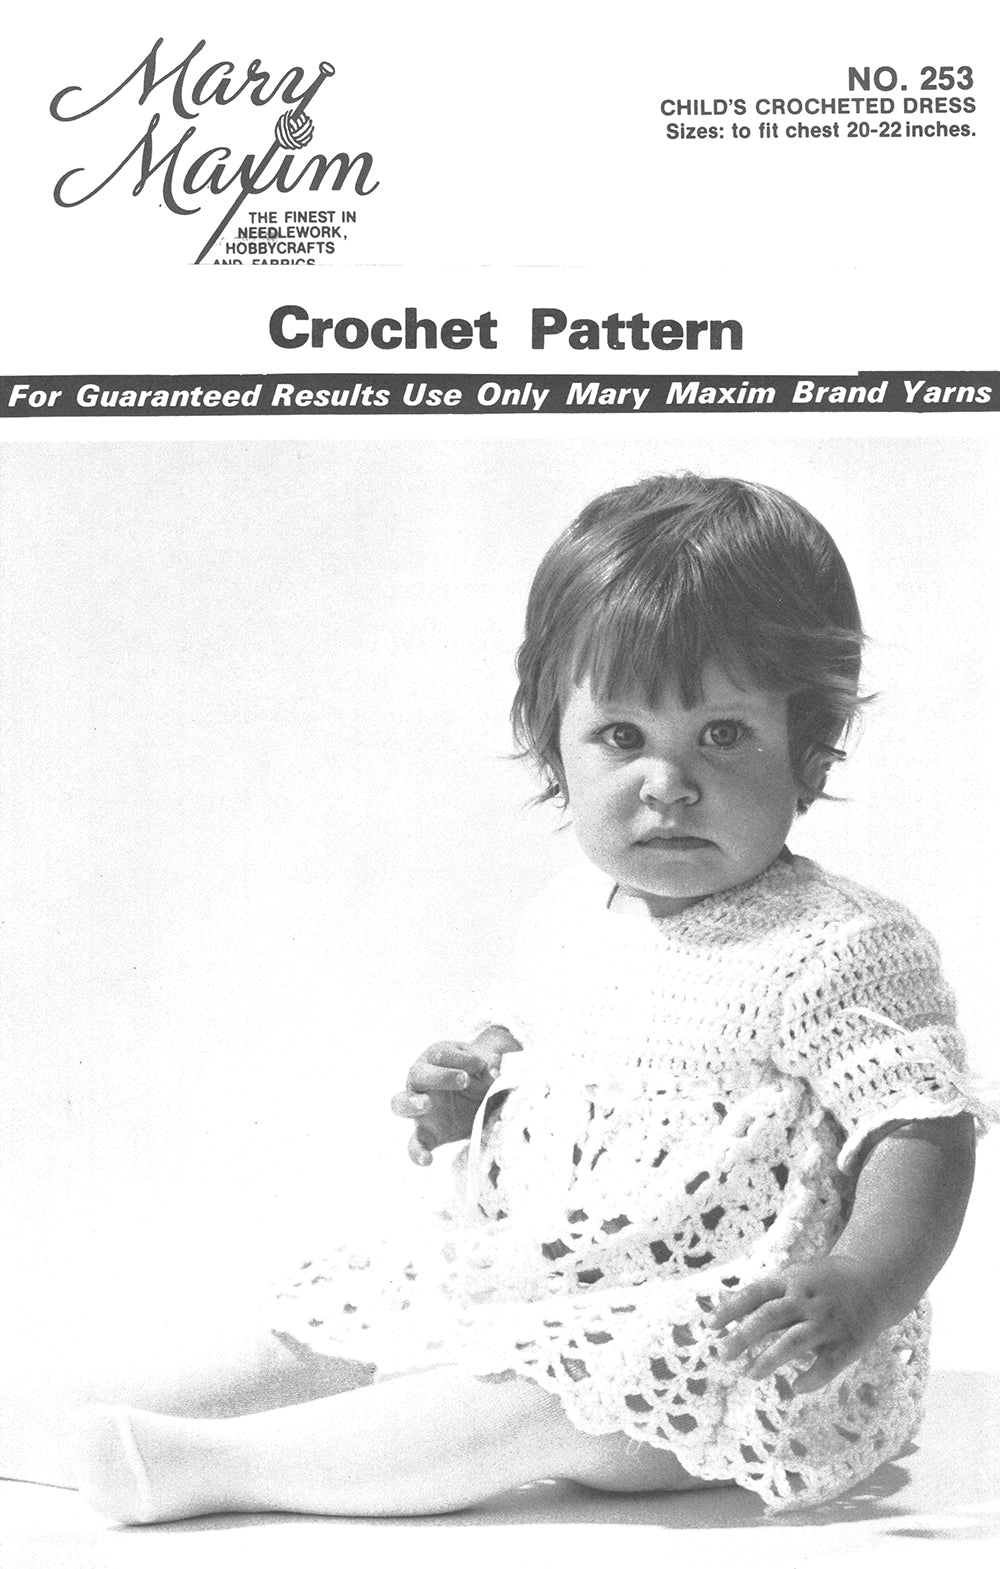 Child's Crocheted Dress Pattern